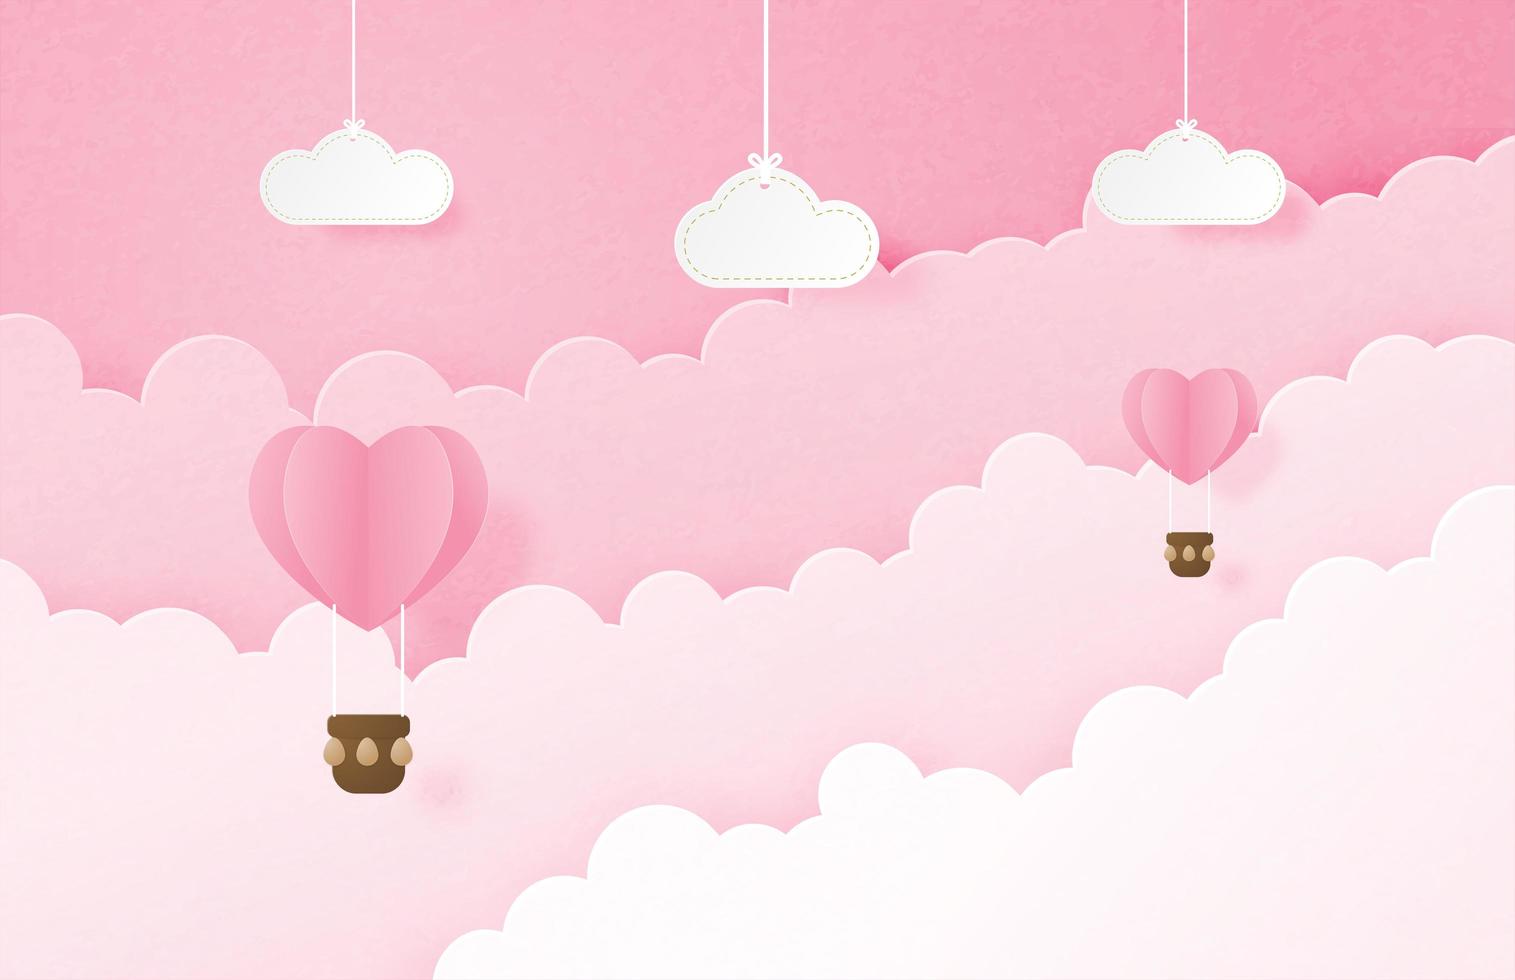 Paper art heart hot air ballons floating among clouds vector